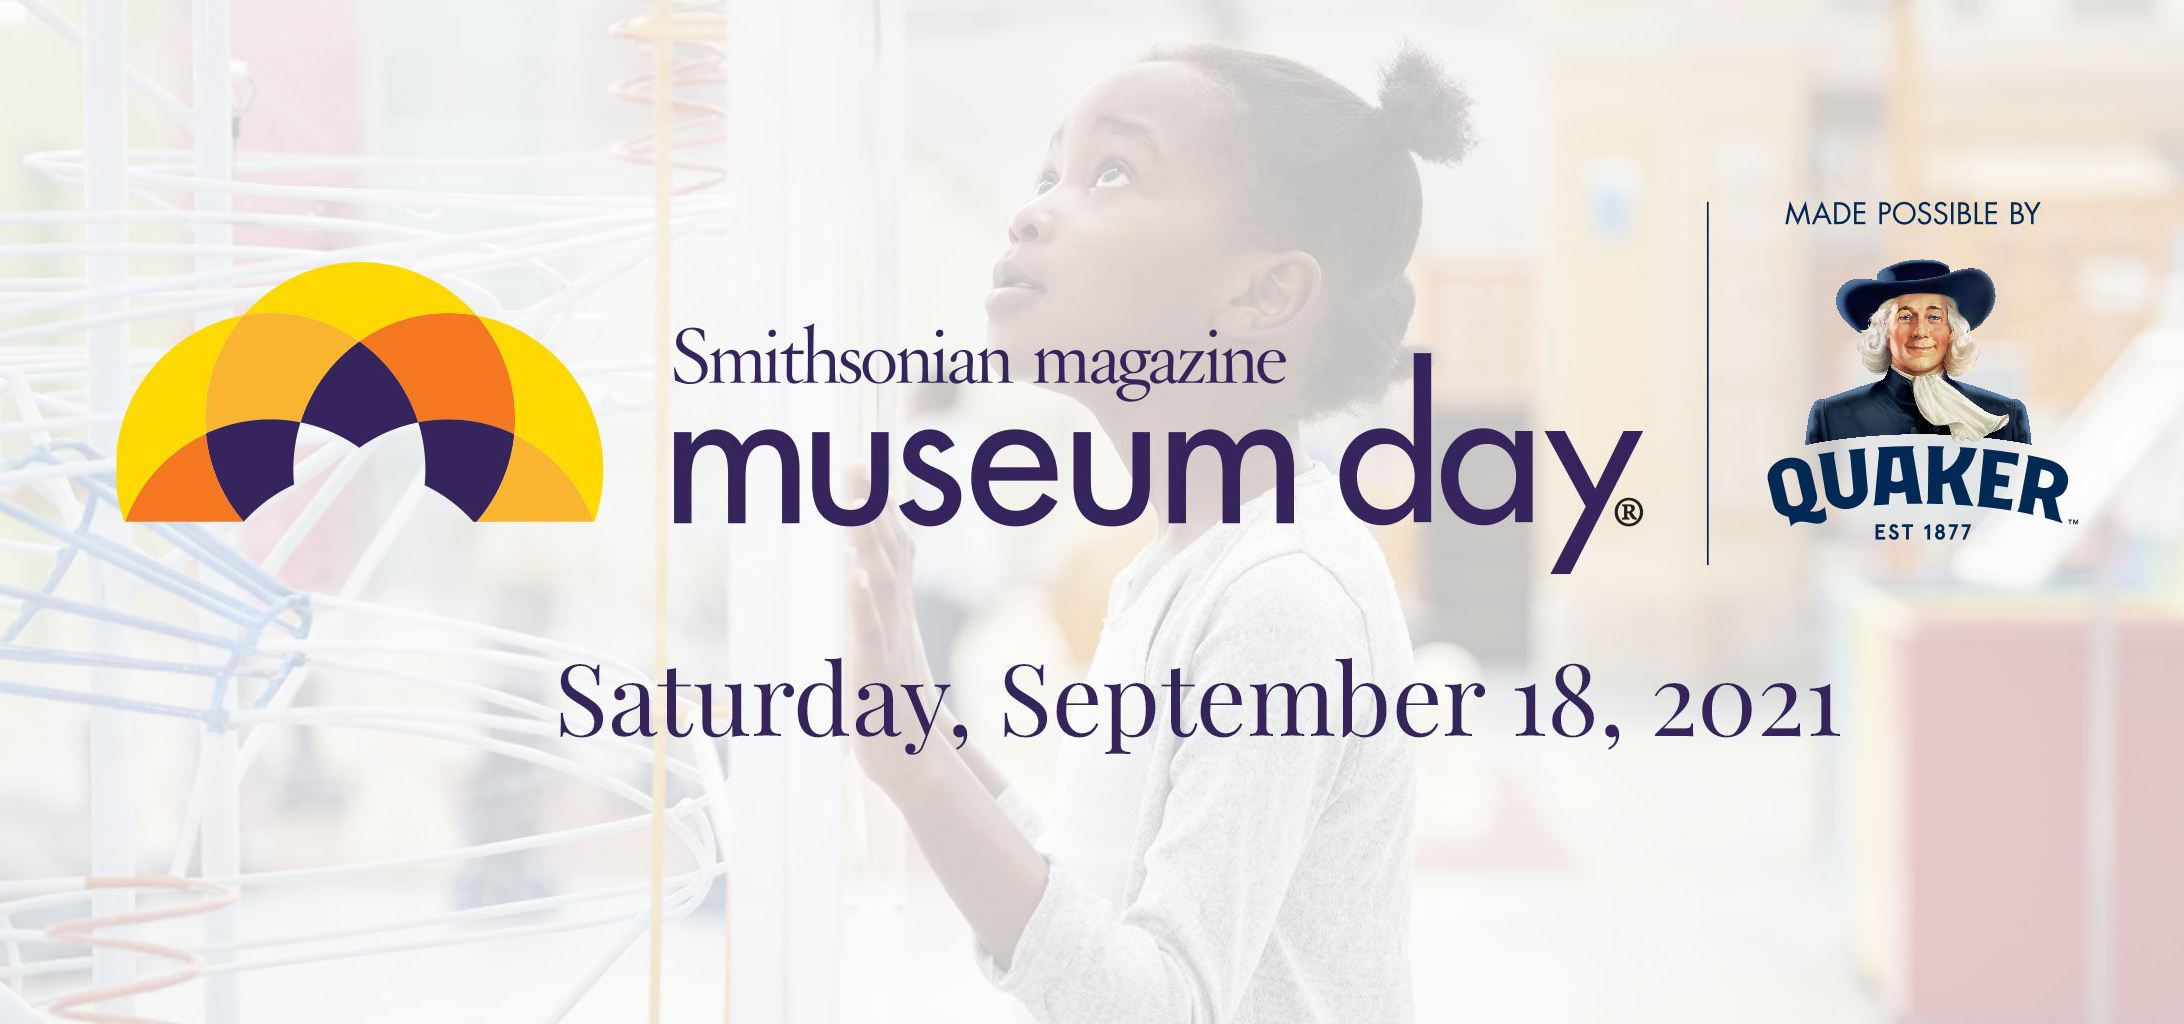 Smithsonian Magazine Museum Day logo with dates